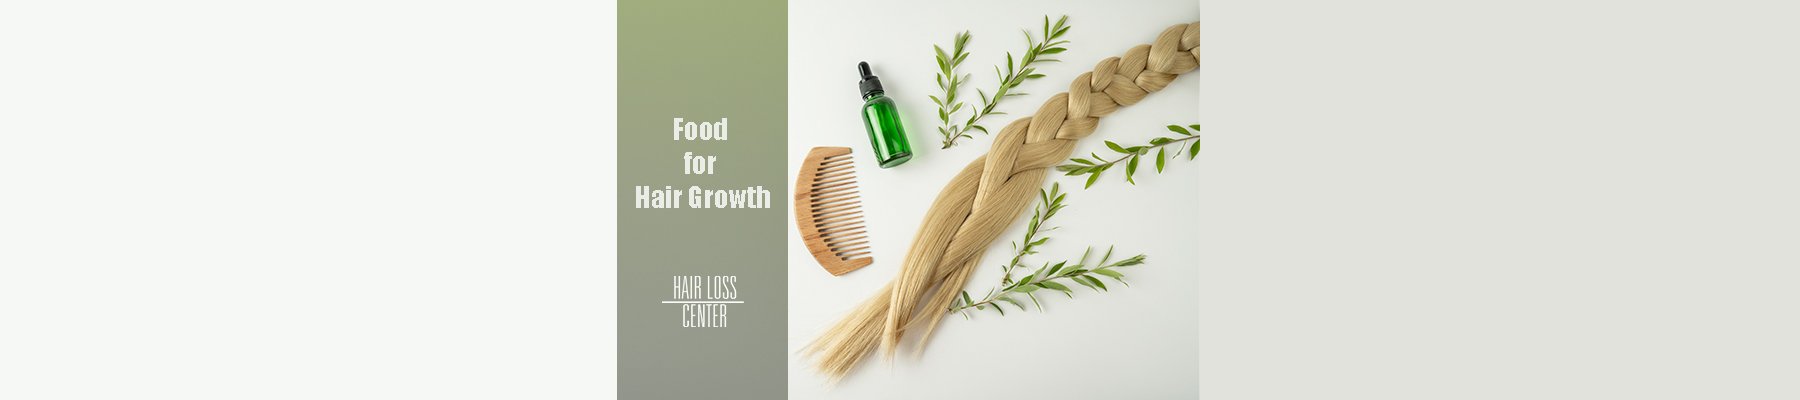 Food for Hair Growth 